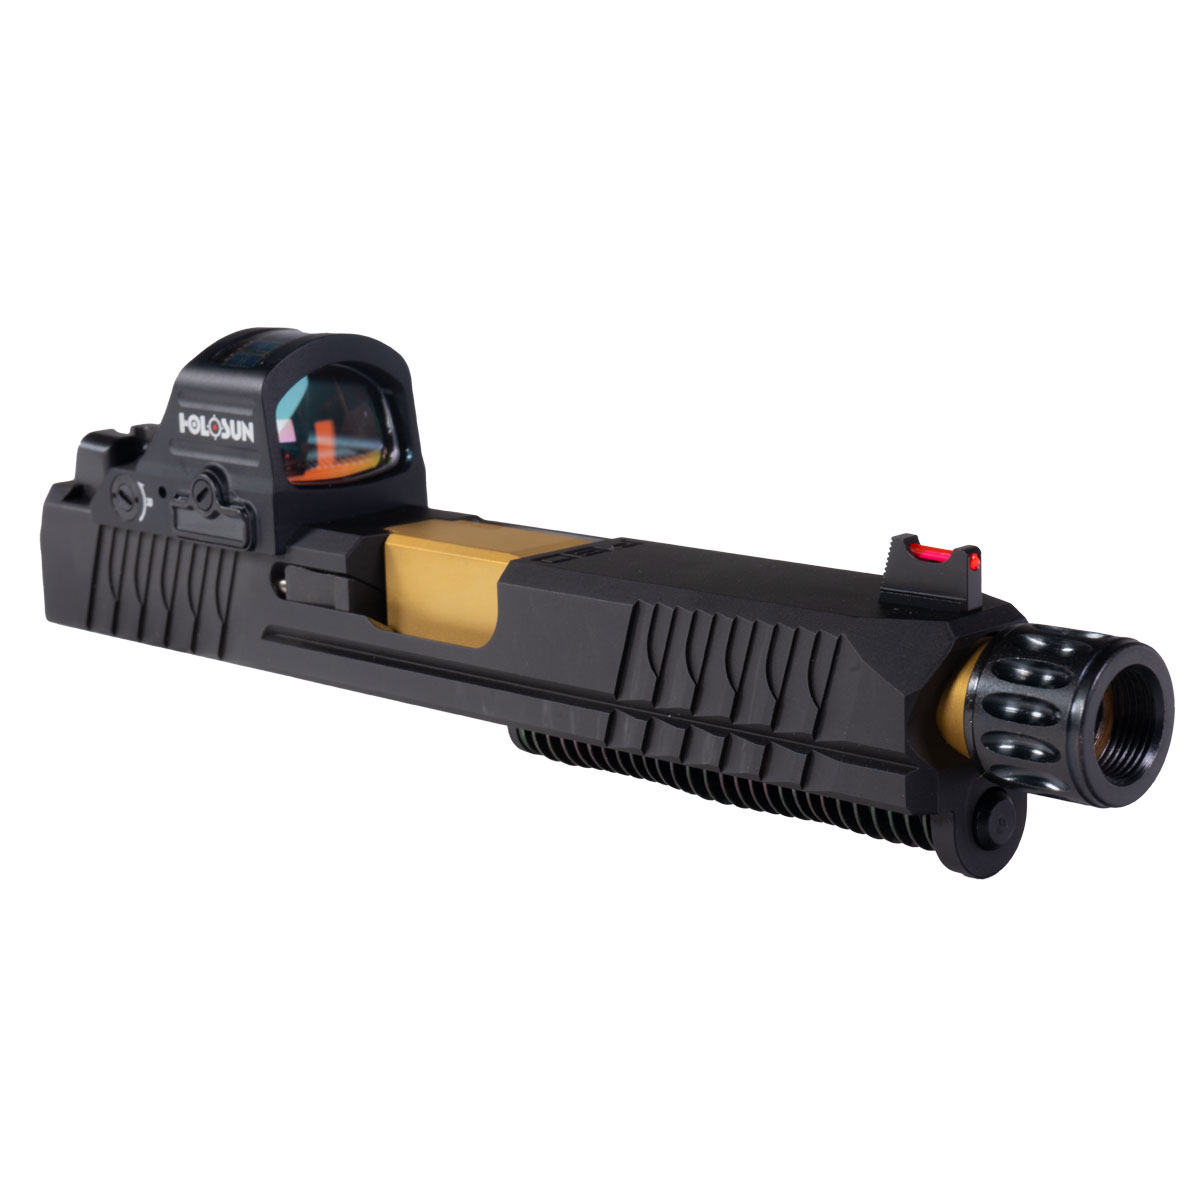 DD 'Fiat Lux w/ HS507C-X2 Red Dot' 9mm Complete Slide Kit - Glock 19 Gen 1-3 Compatible